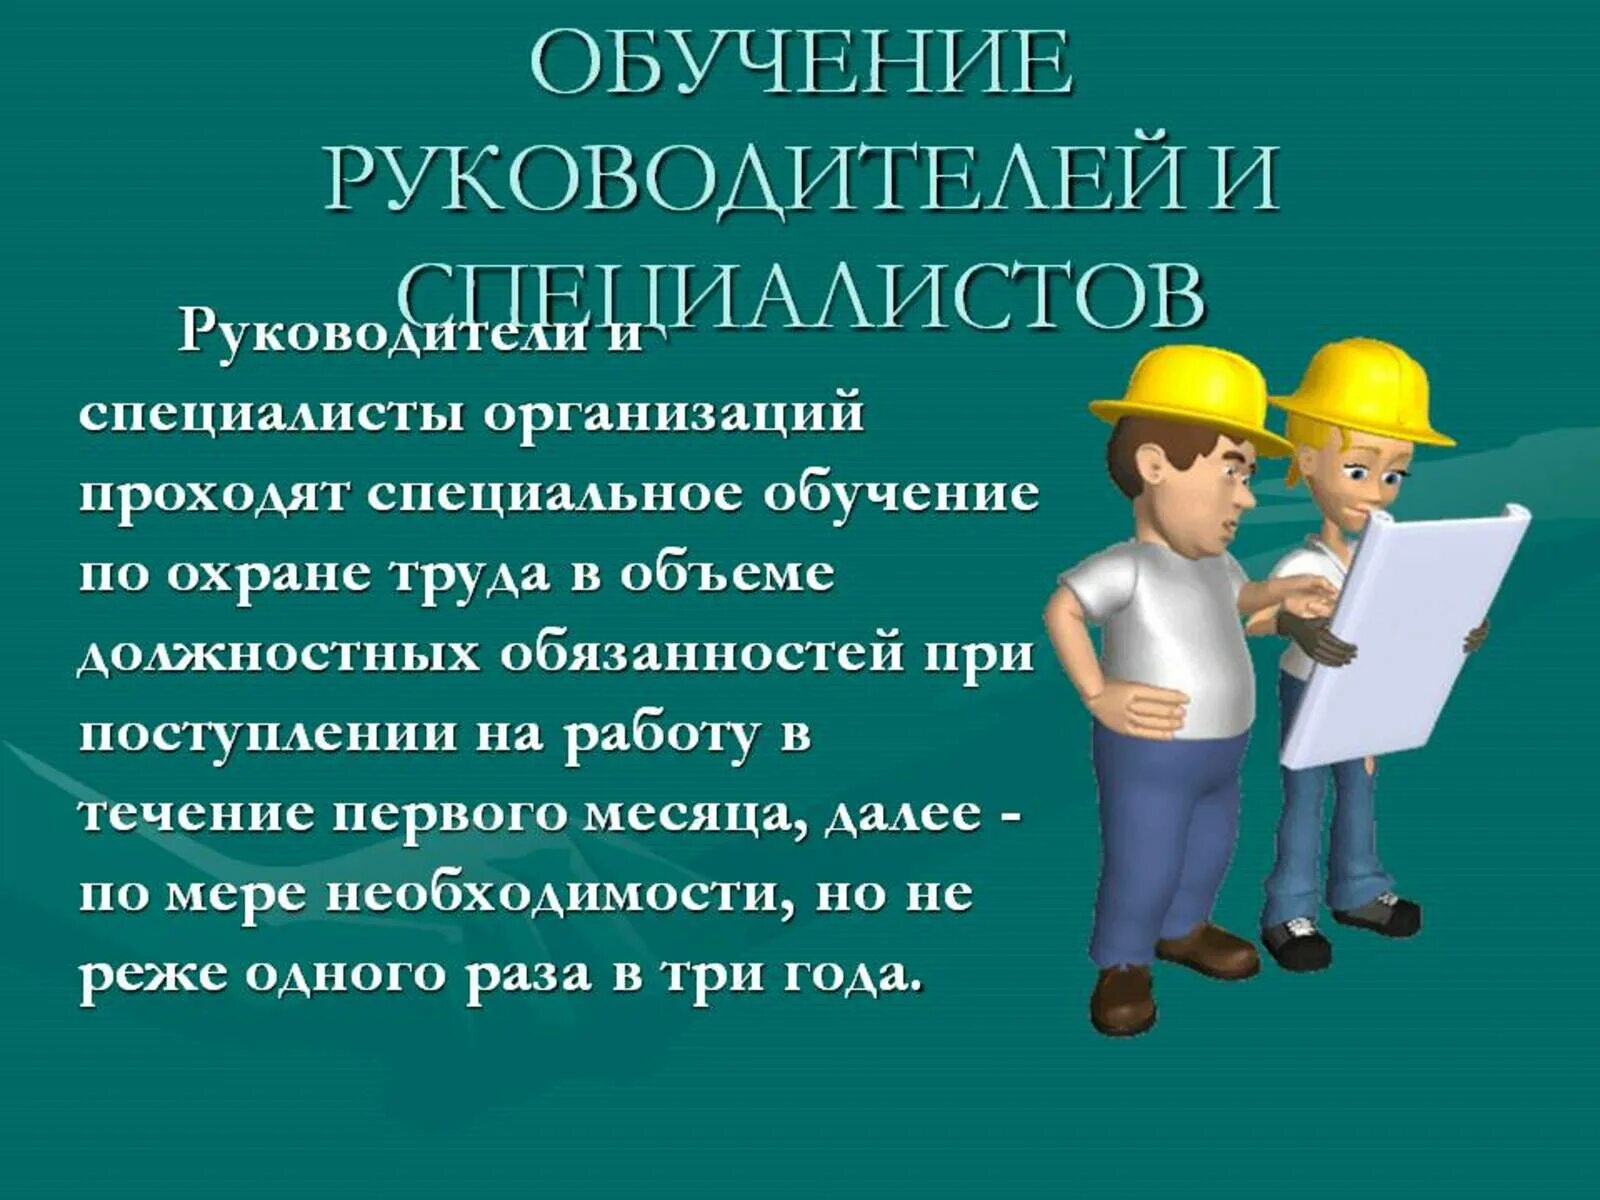 Главное правило охраны труда. Охрана труда. Подготовка охрана труда. Иллюстрации по охране труда. Обучение по охране труда для руководителей.